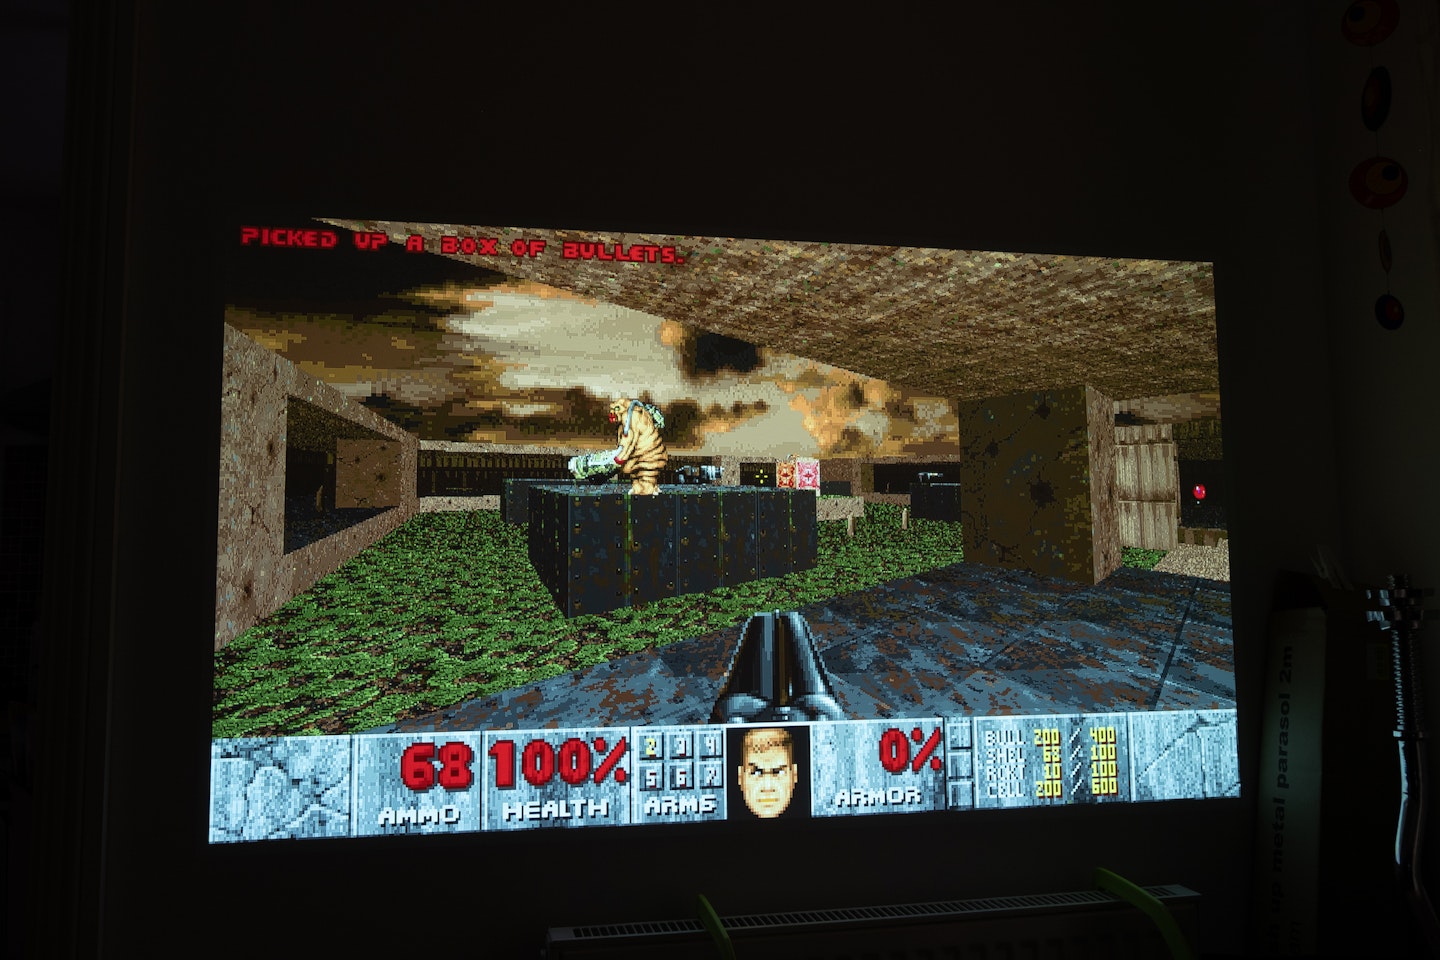 XGIMI HORIZON Pro 4K Projector playing Doom II